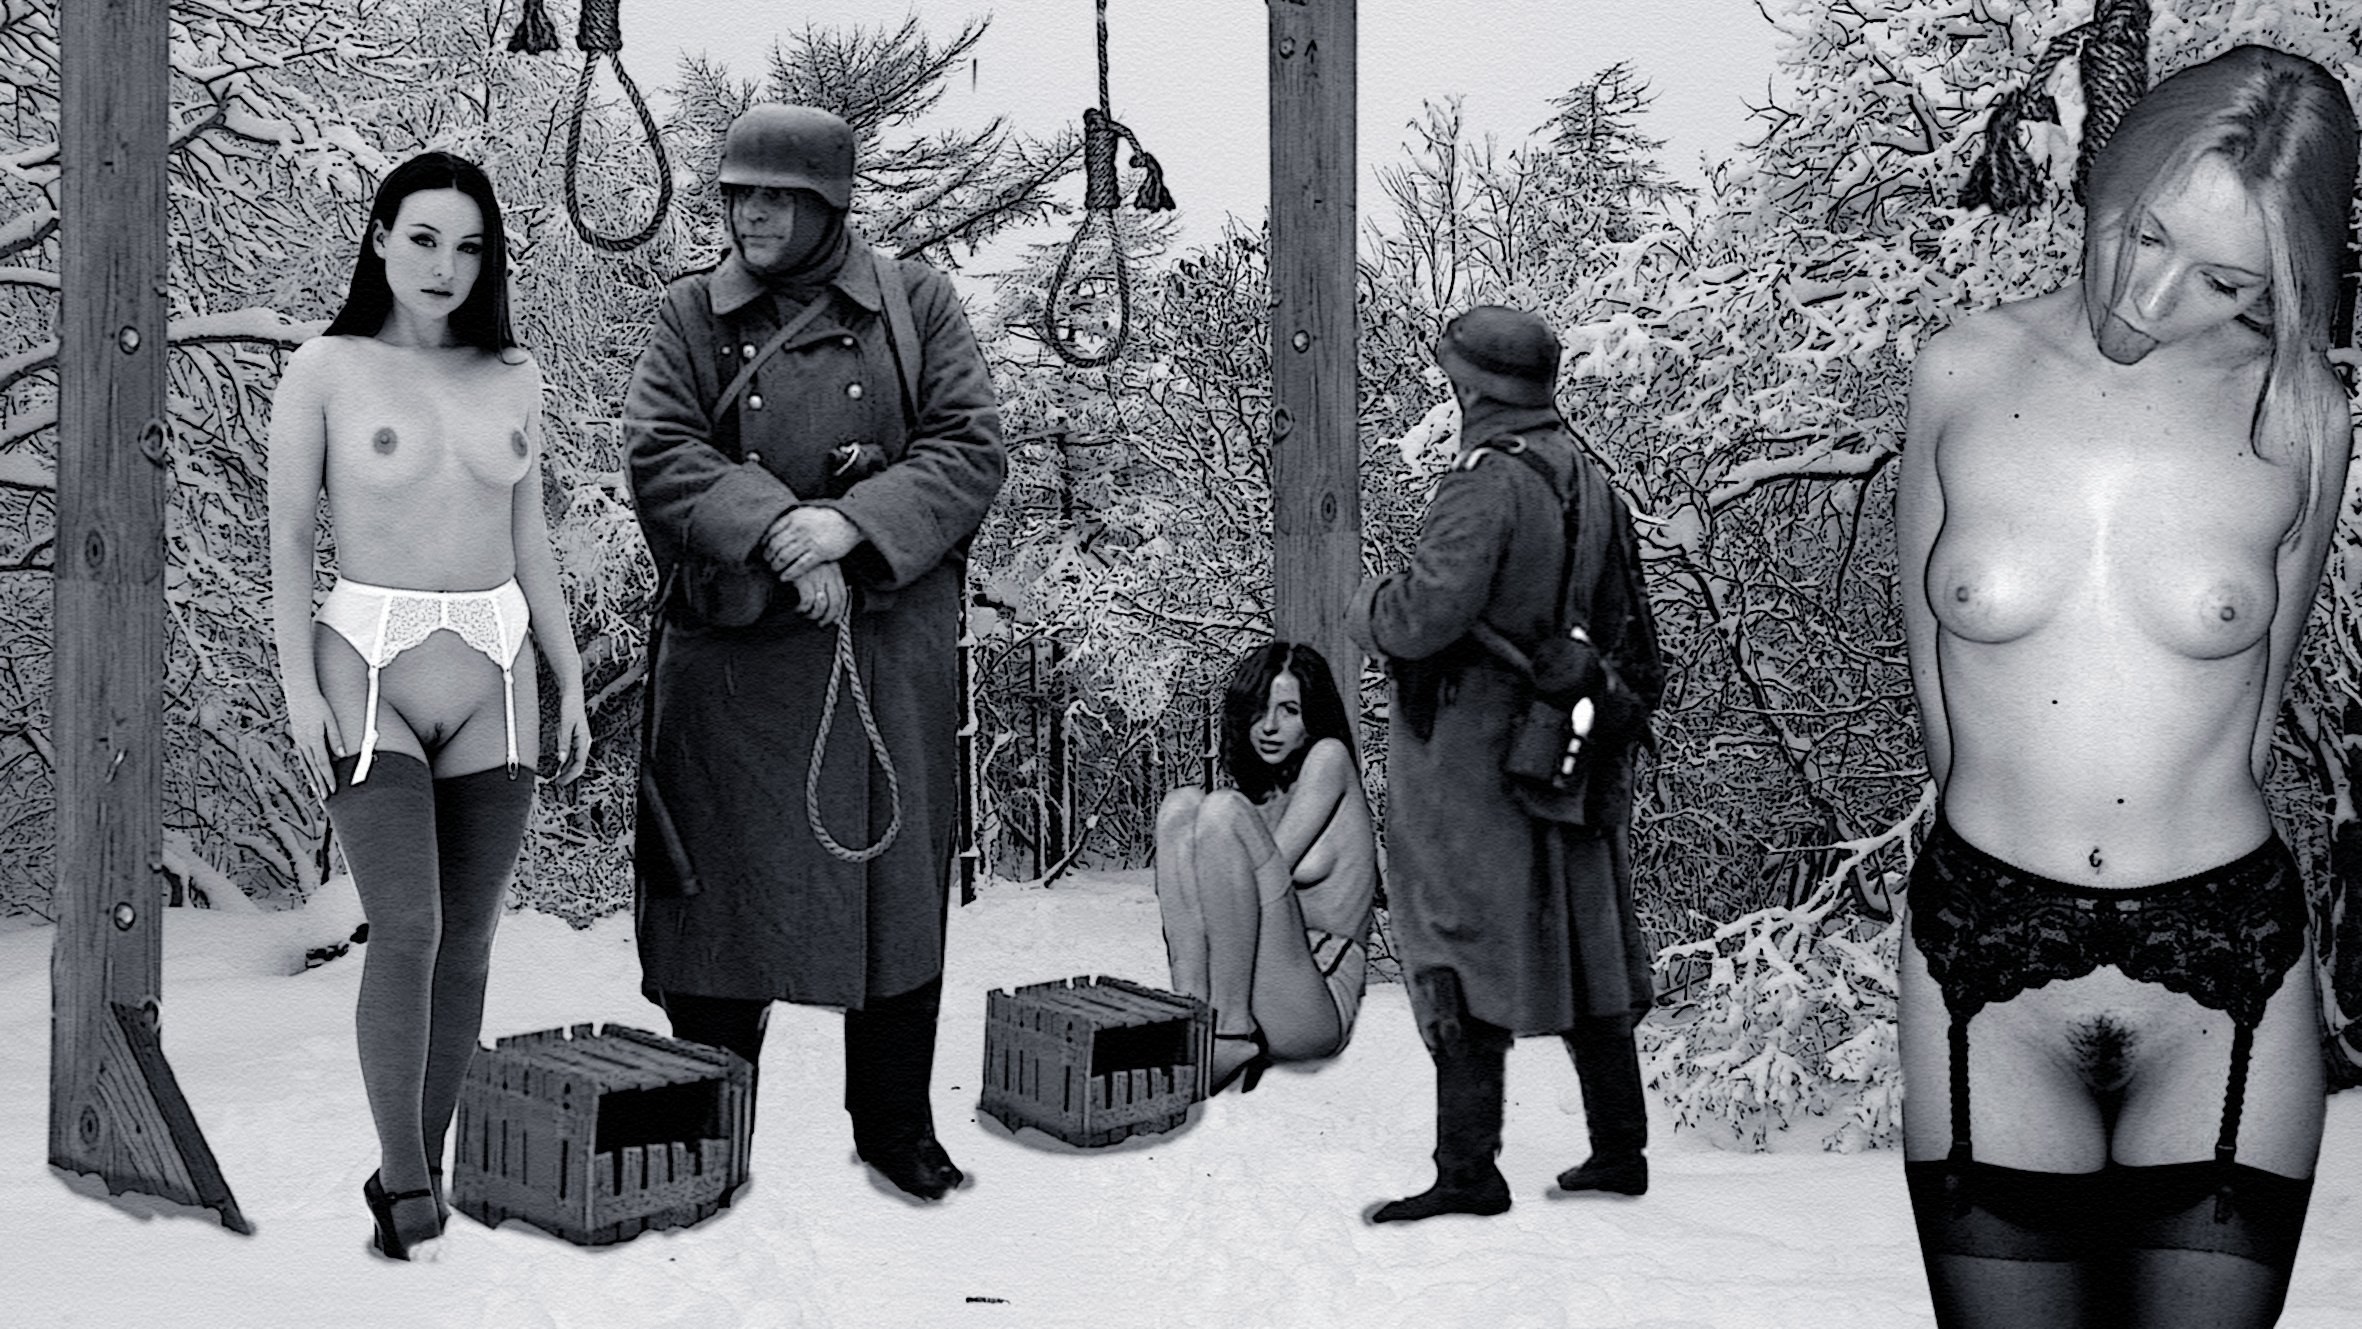 немцы трахали баб во время войны фото 17